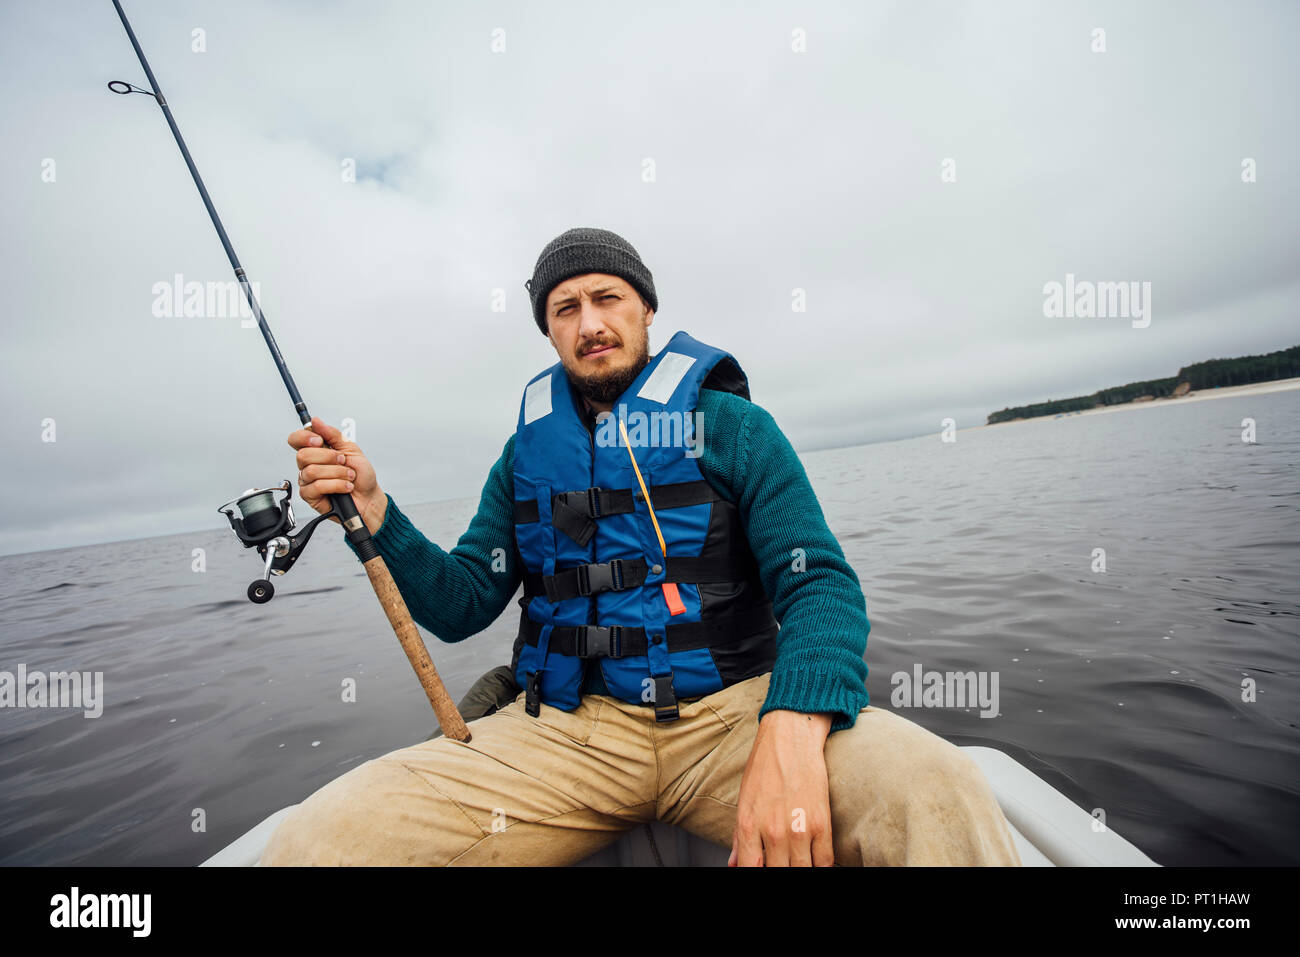 Man sitting on boat fishing with fishing rod Stock Photo